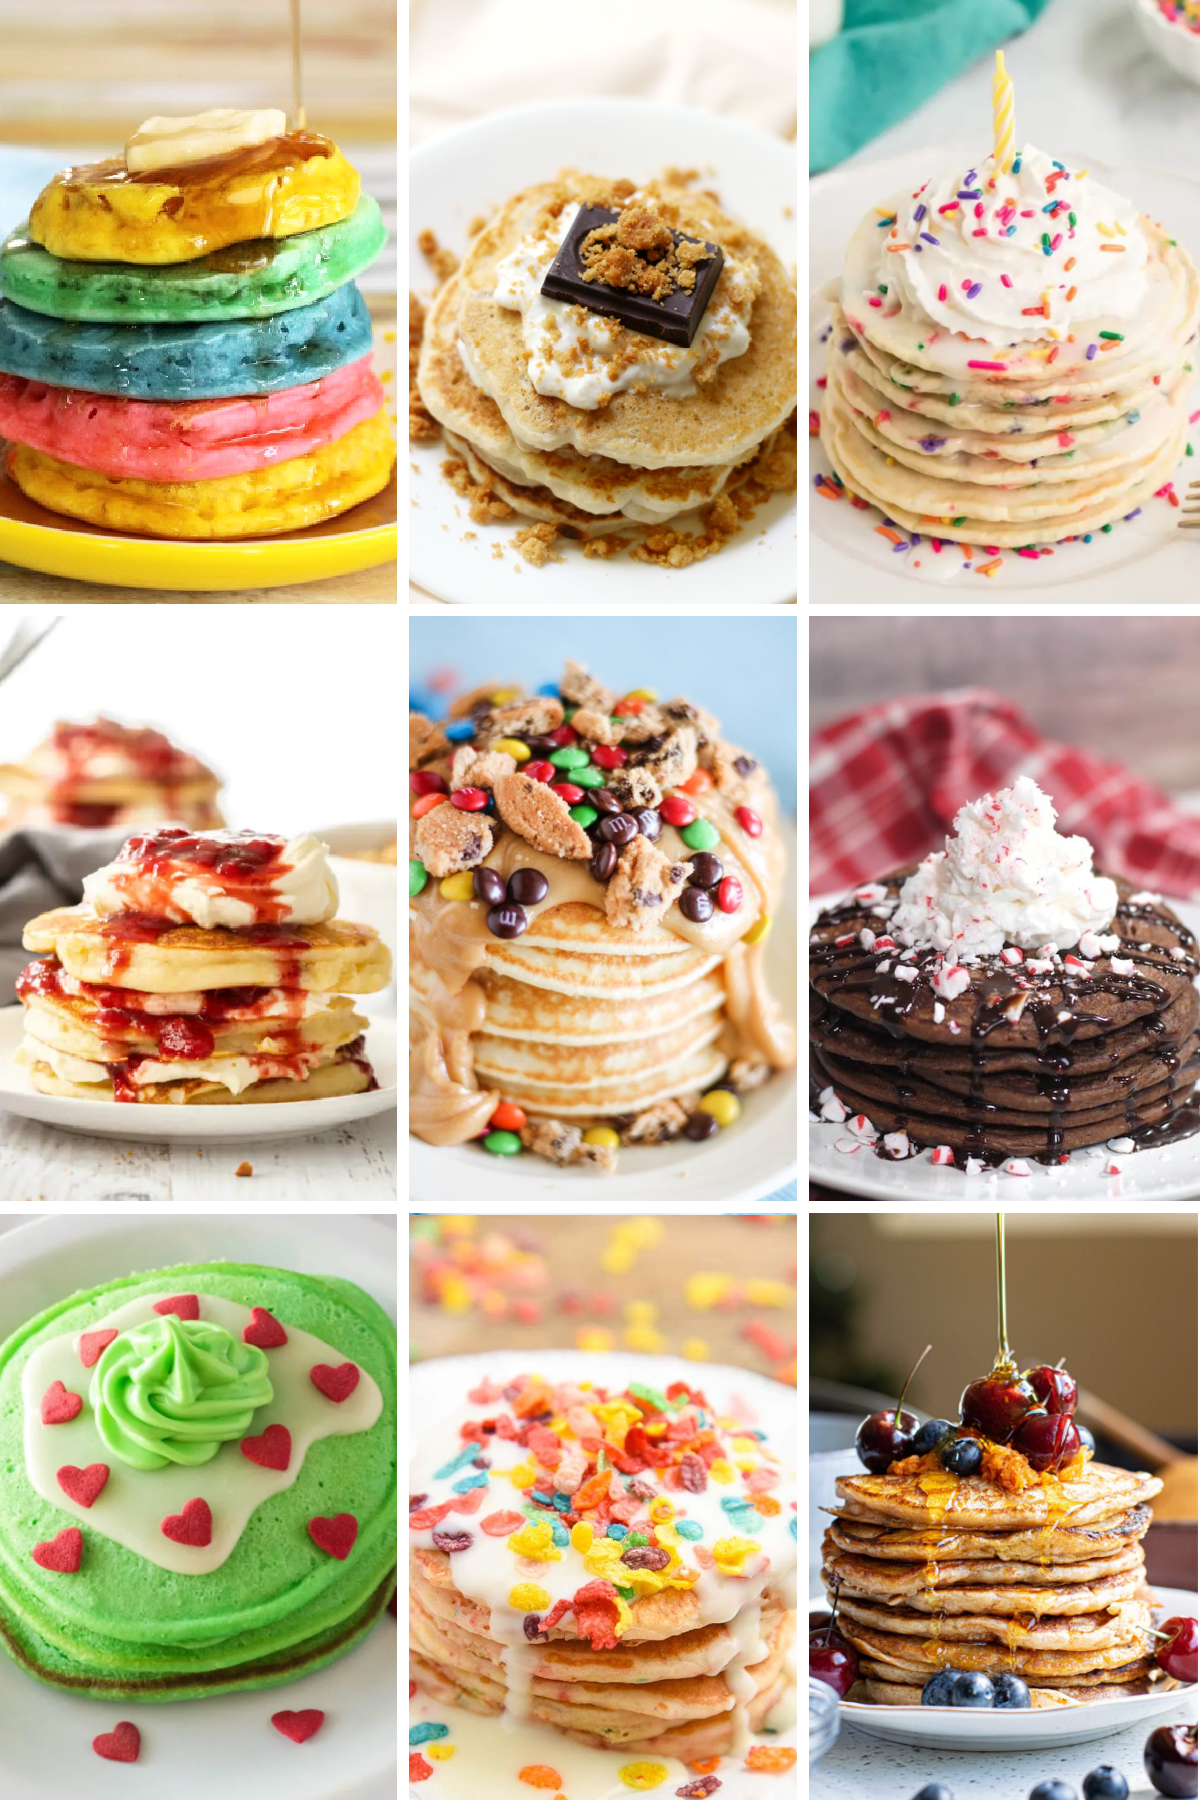 Pictures of fun pancake ideas